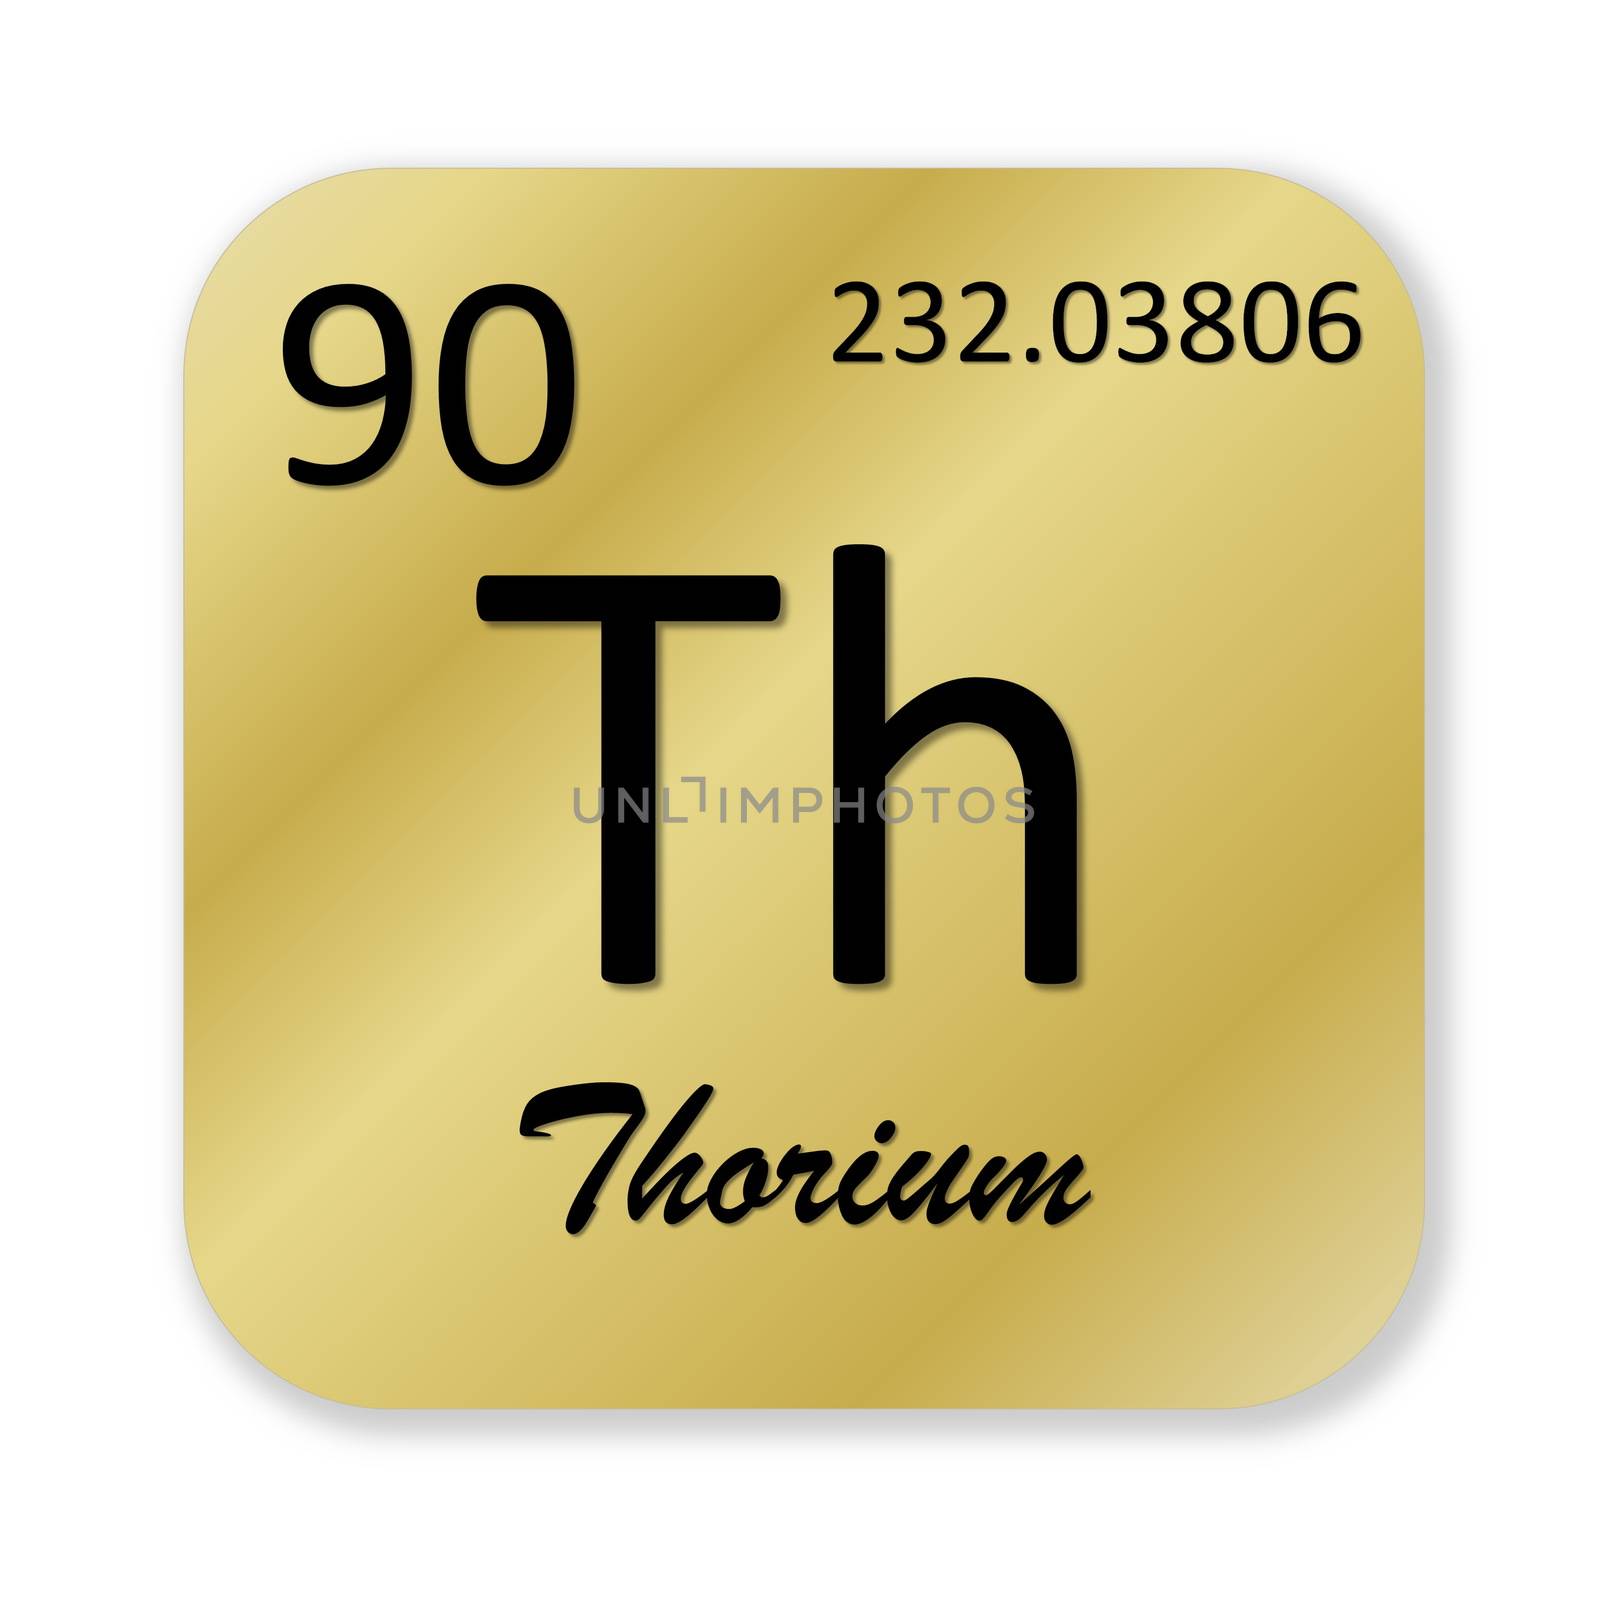 Thorium element by Elenaphotos21